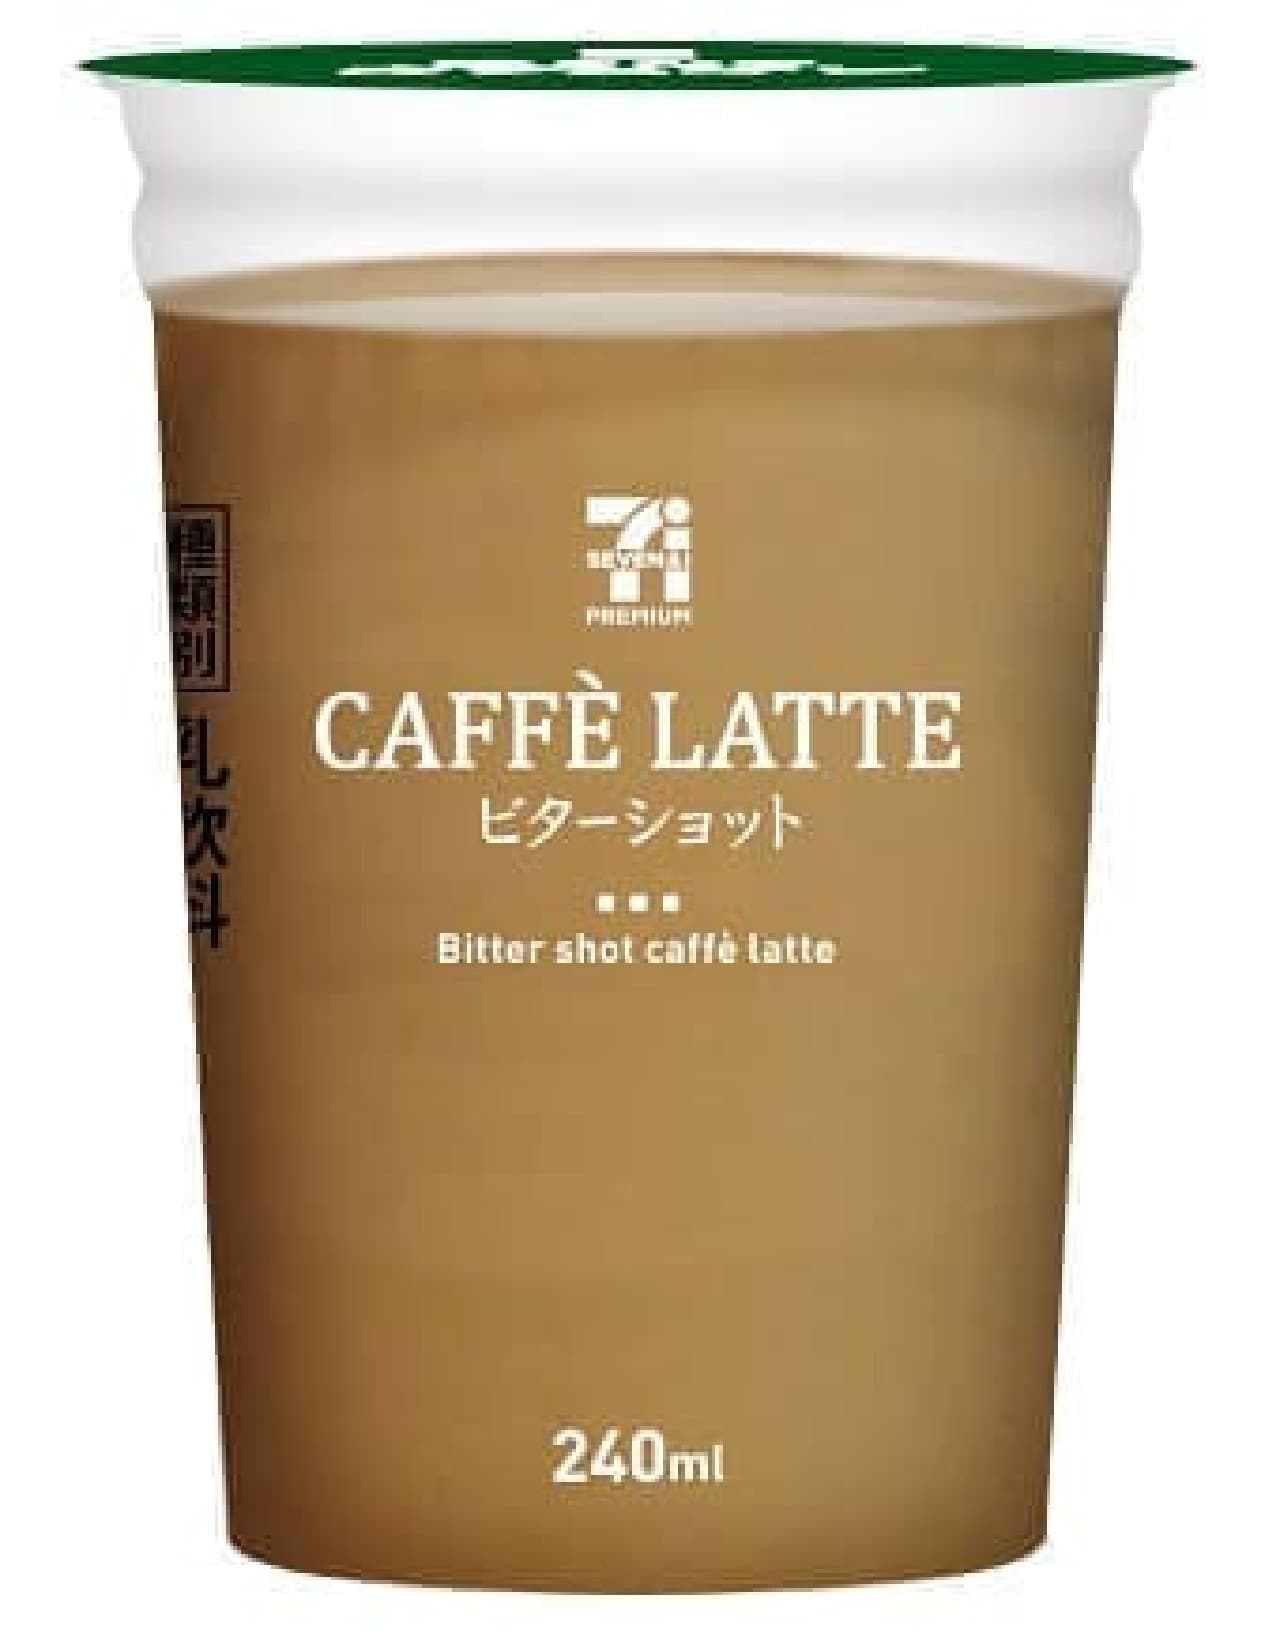 7-ELEVEN Premium Cafe Latte Bitter Shot 240ml